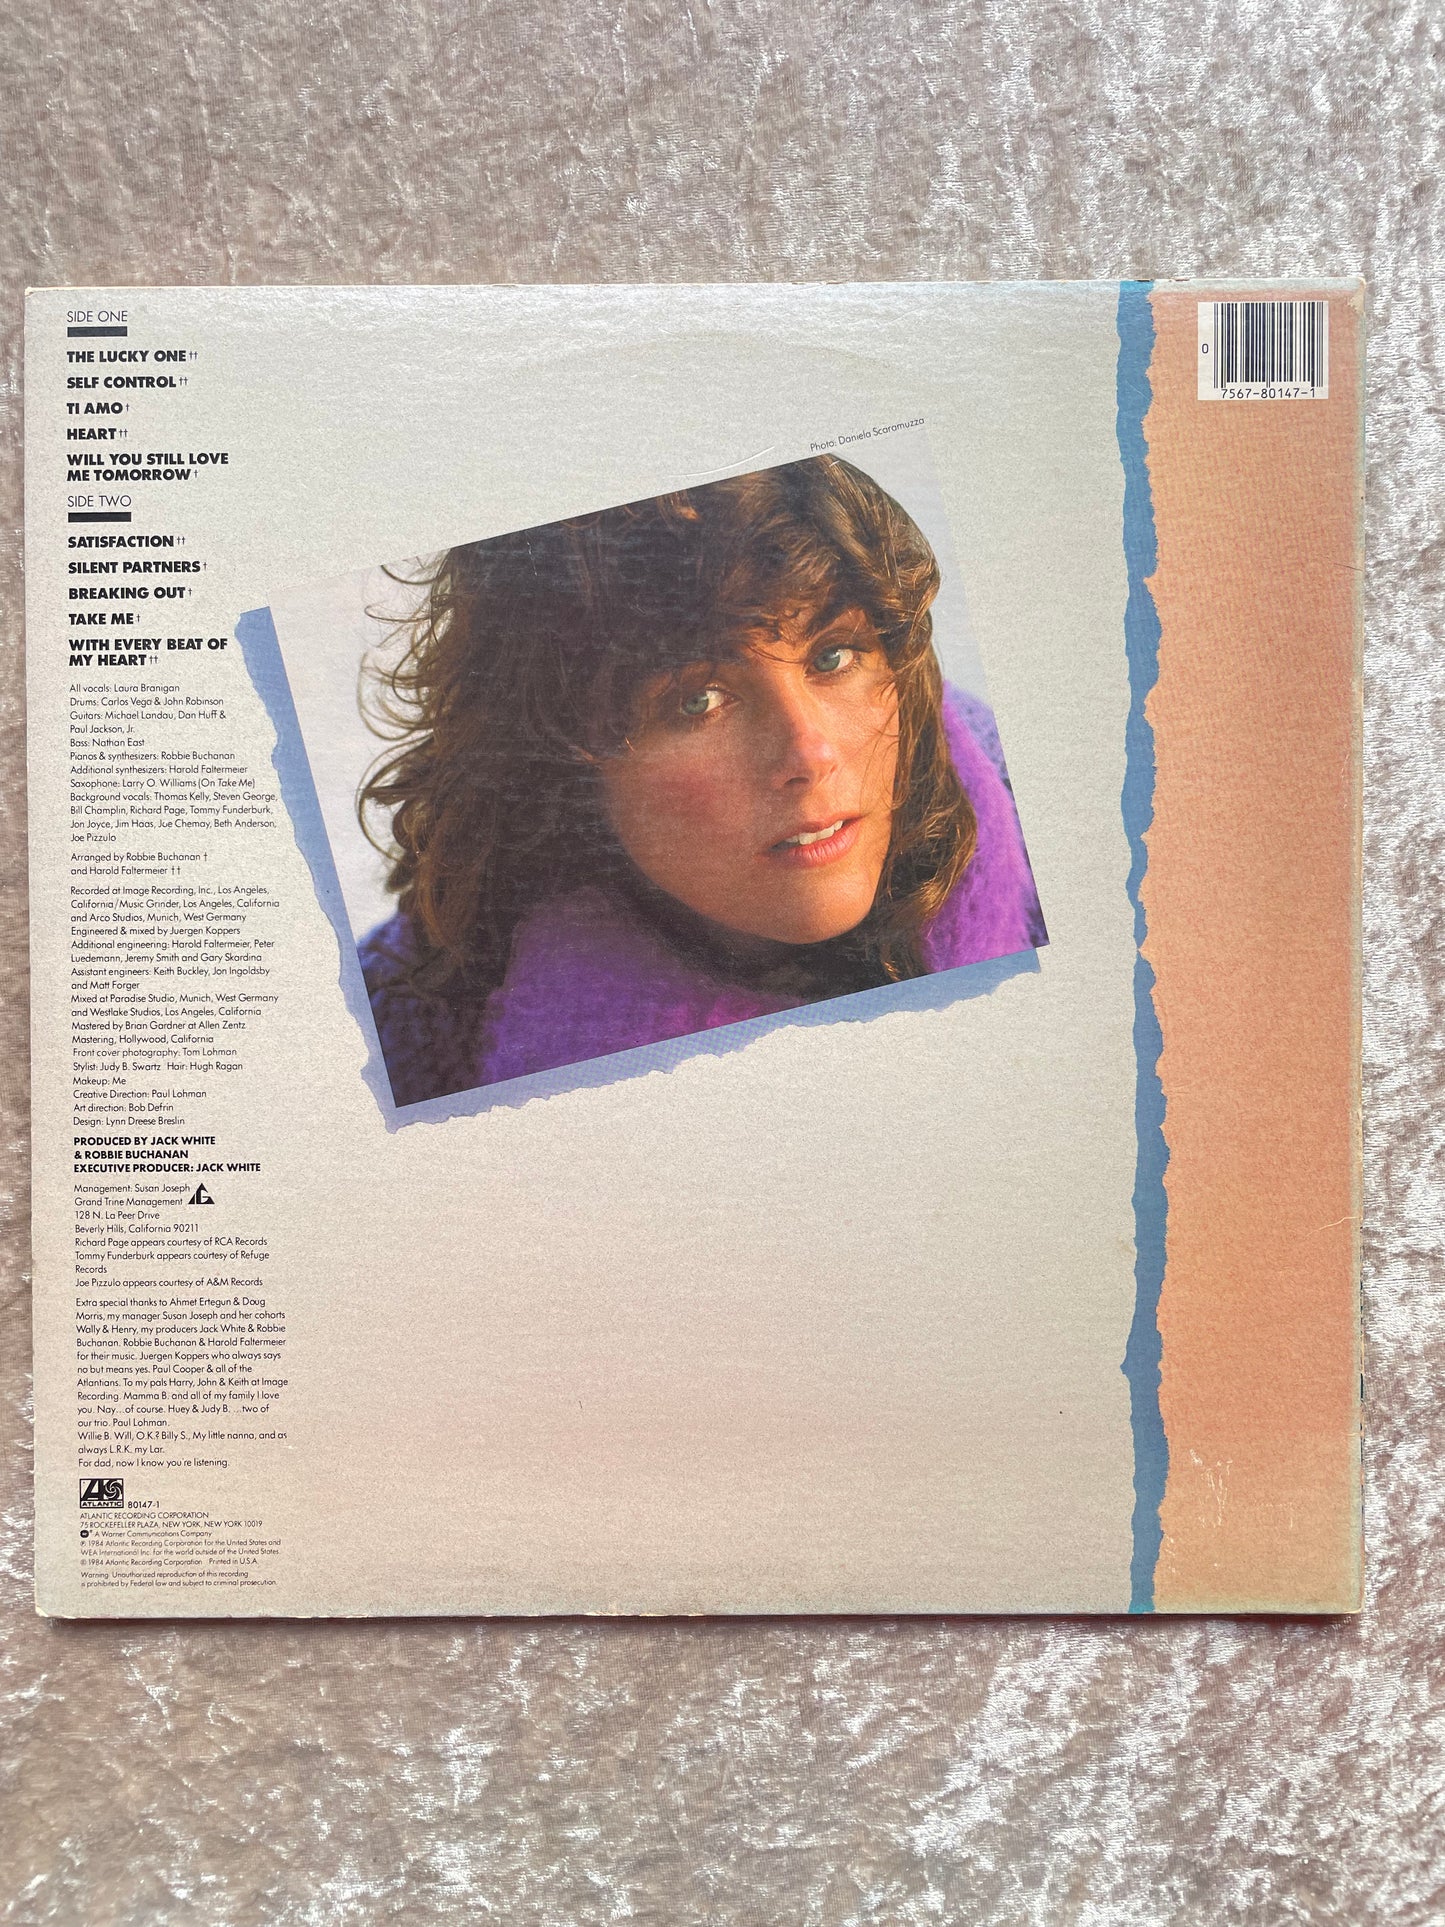 Vinyl Record LP Laura Brannigan Self Control 1984